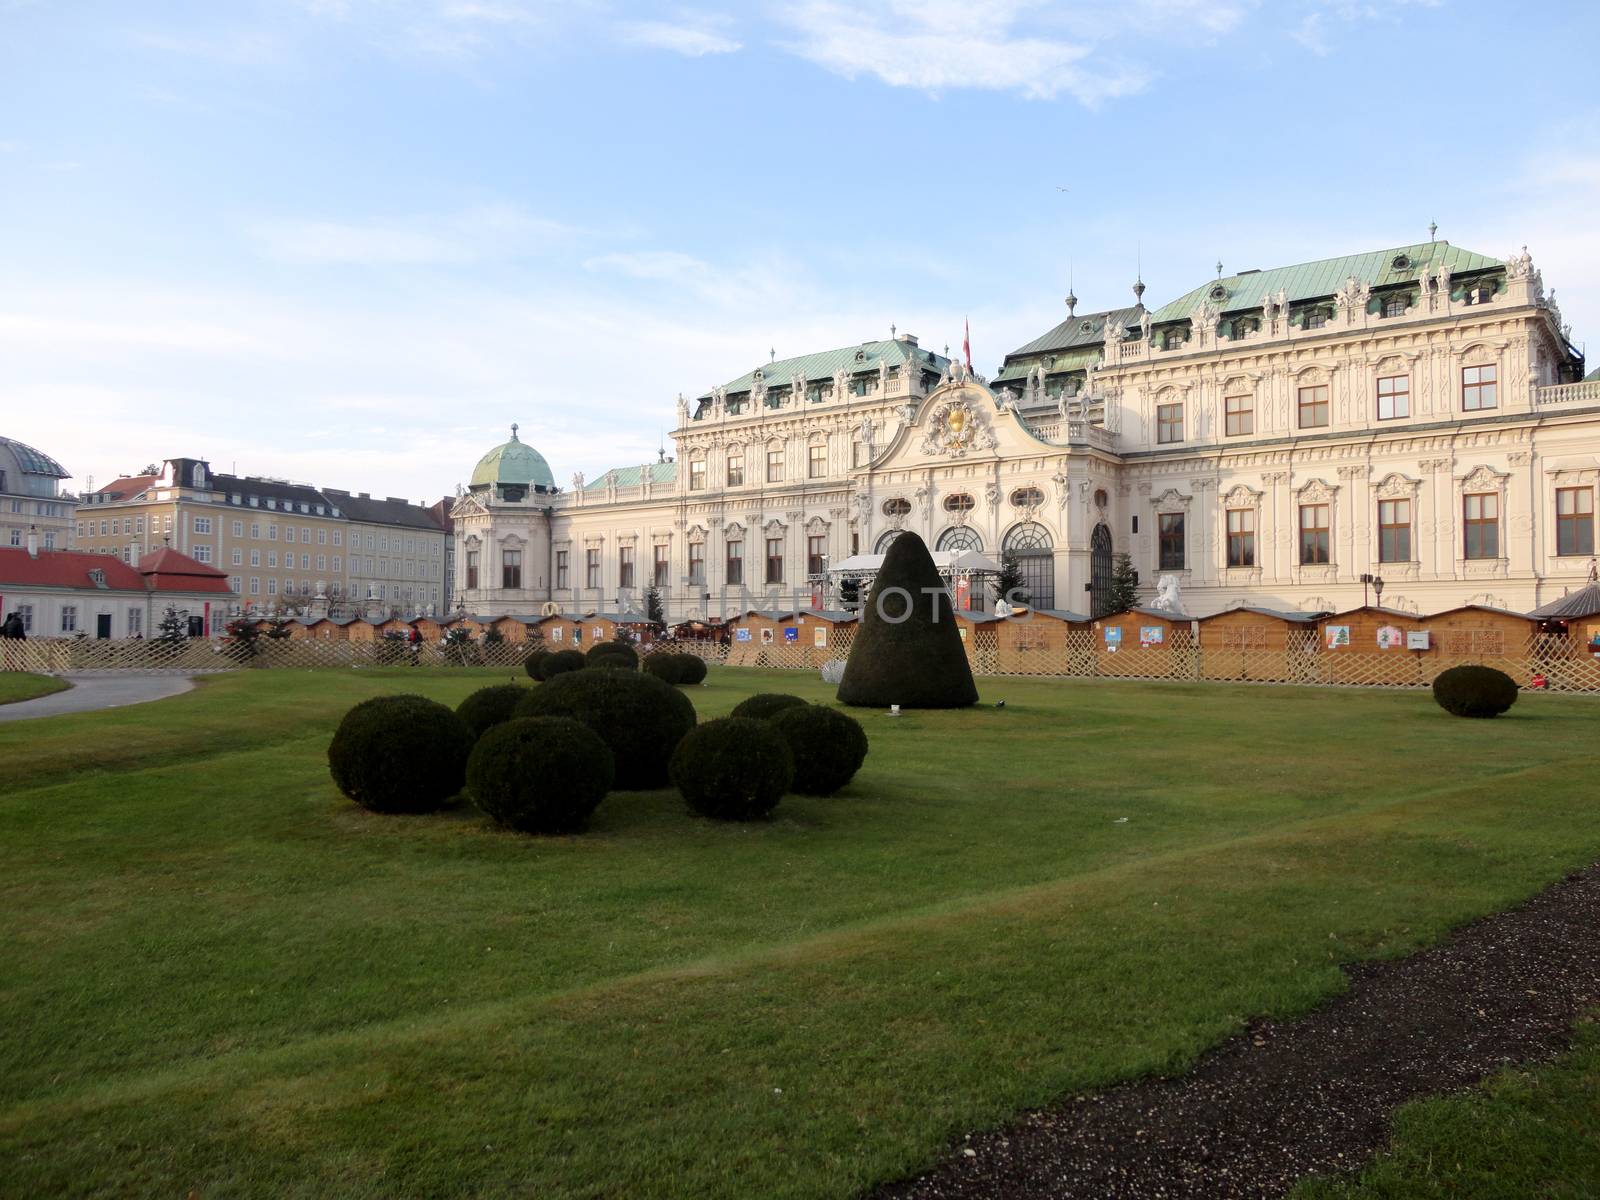 Distant, side view of Belvedere, Vienna, Austria.

Picture taken on December 19, 2011.